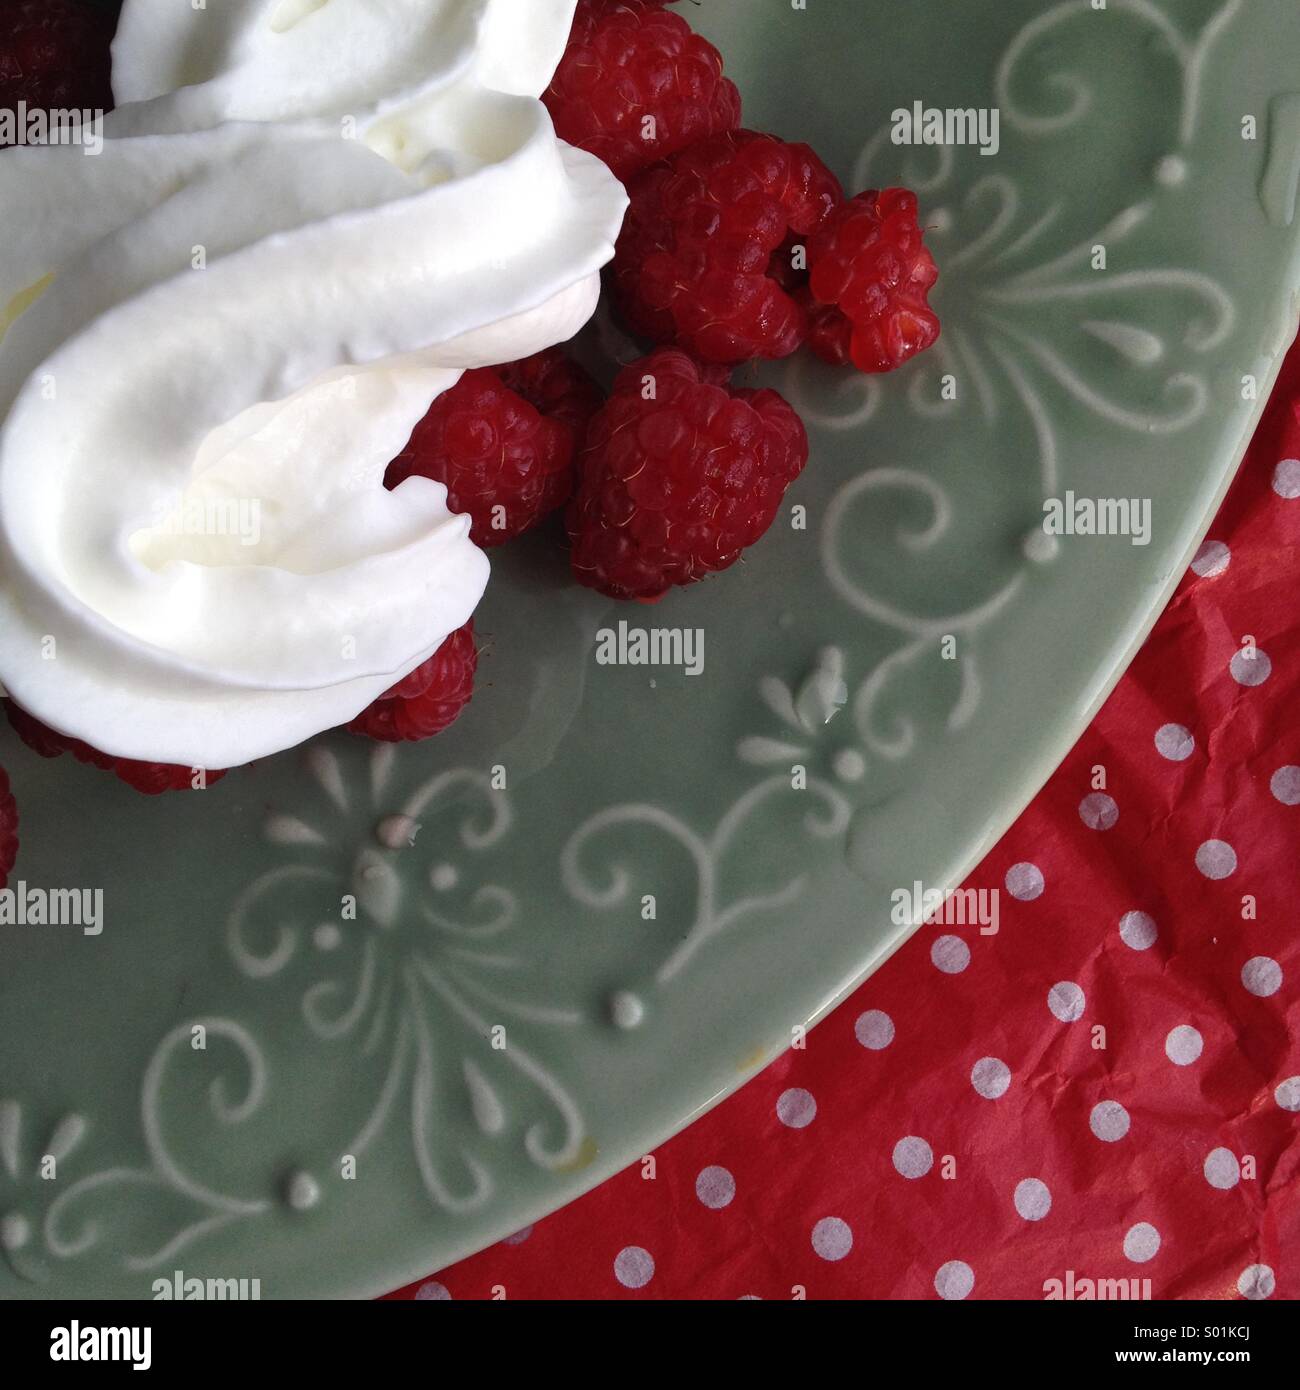 Raspberries and Whipped Cream Stock Photo